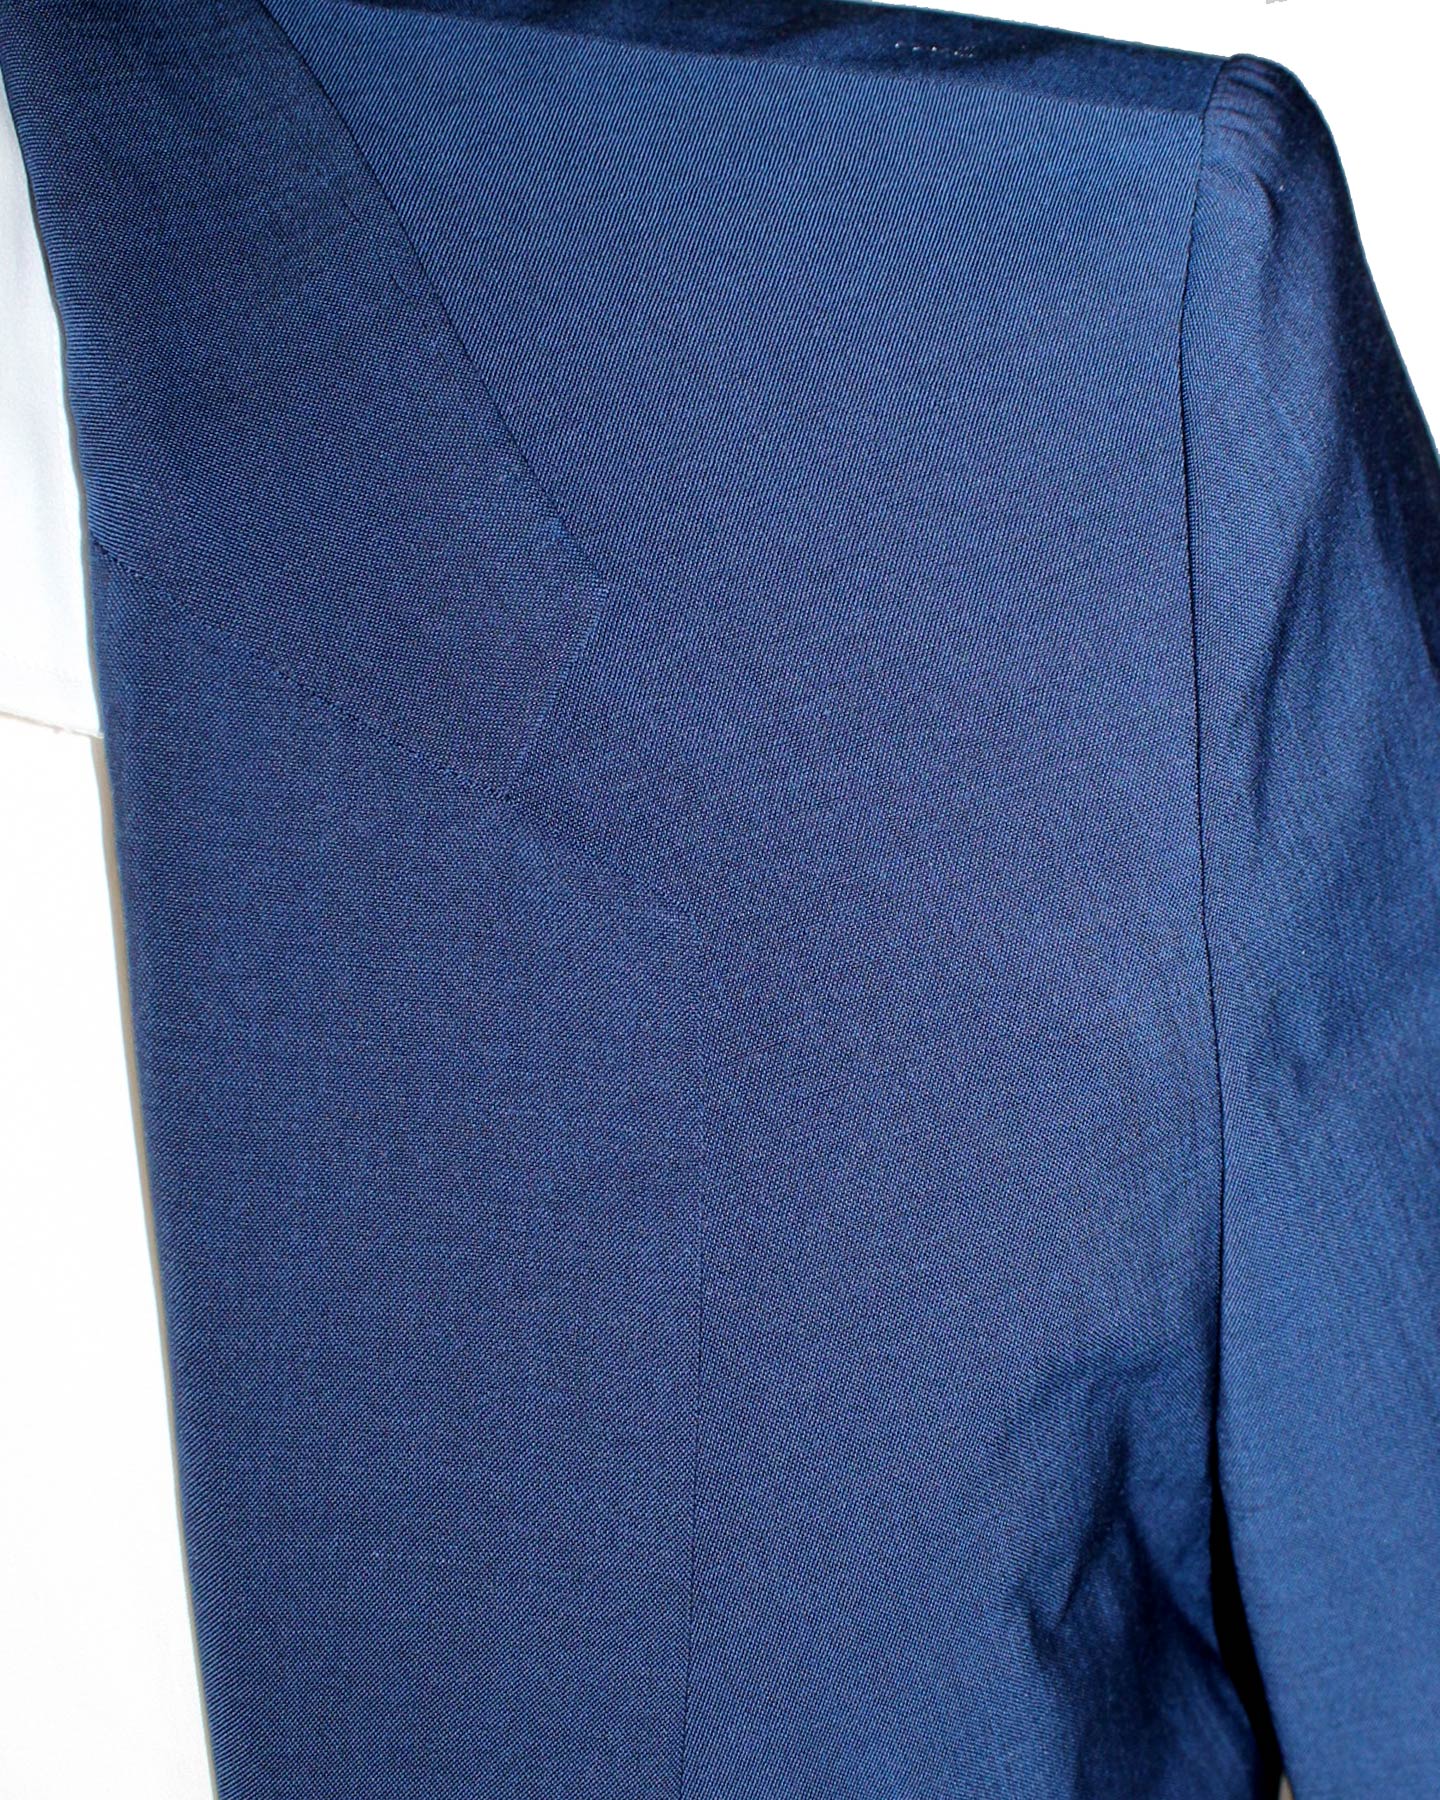 Hugo Boss Sport Coat Dark Blue Unlined Blazer EU 48 / US 38 Slim Fit